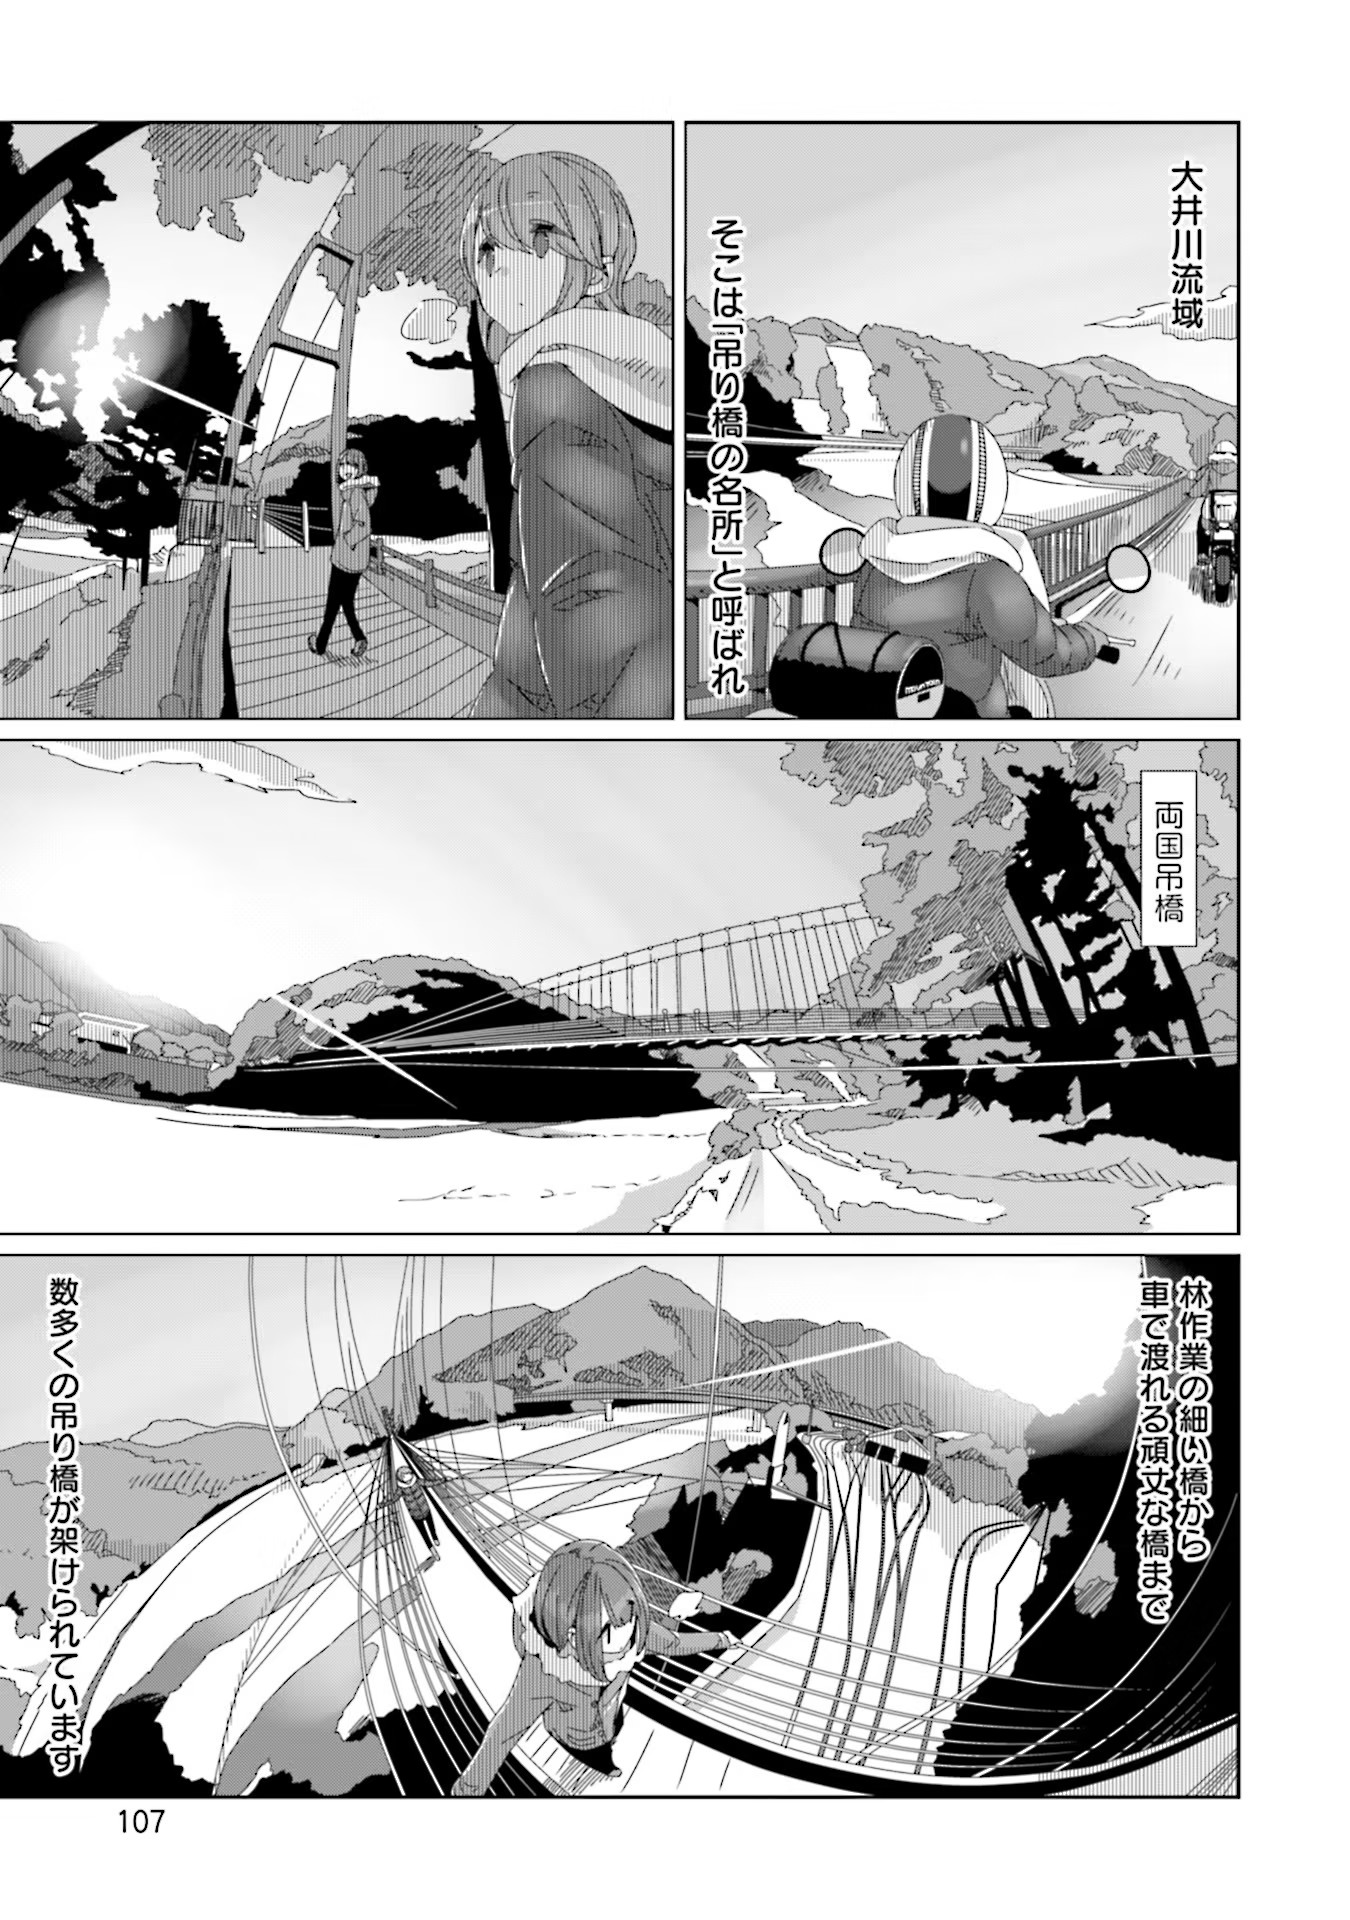 Yuru Camp - Chapter 57 - Page 1